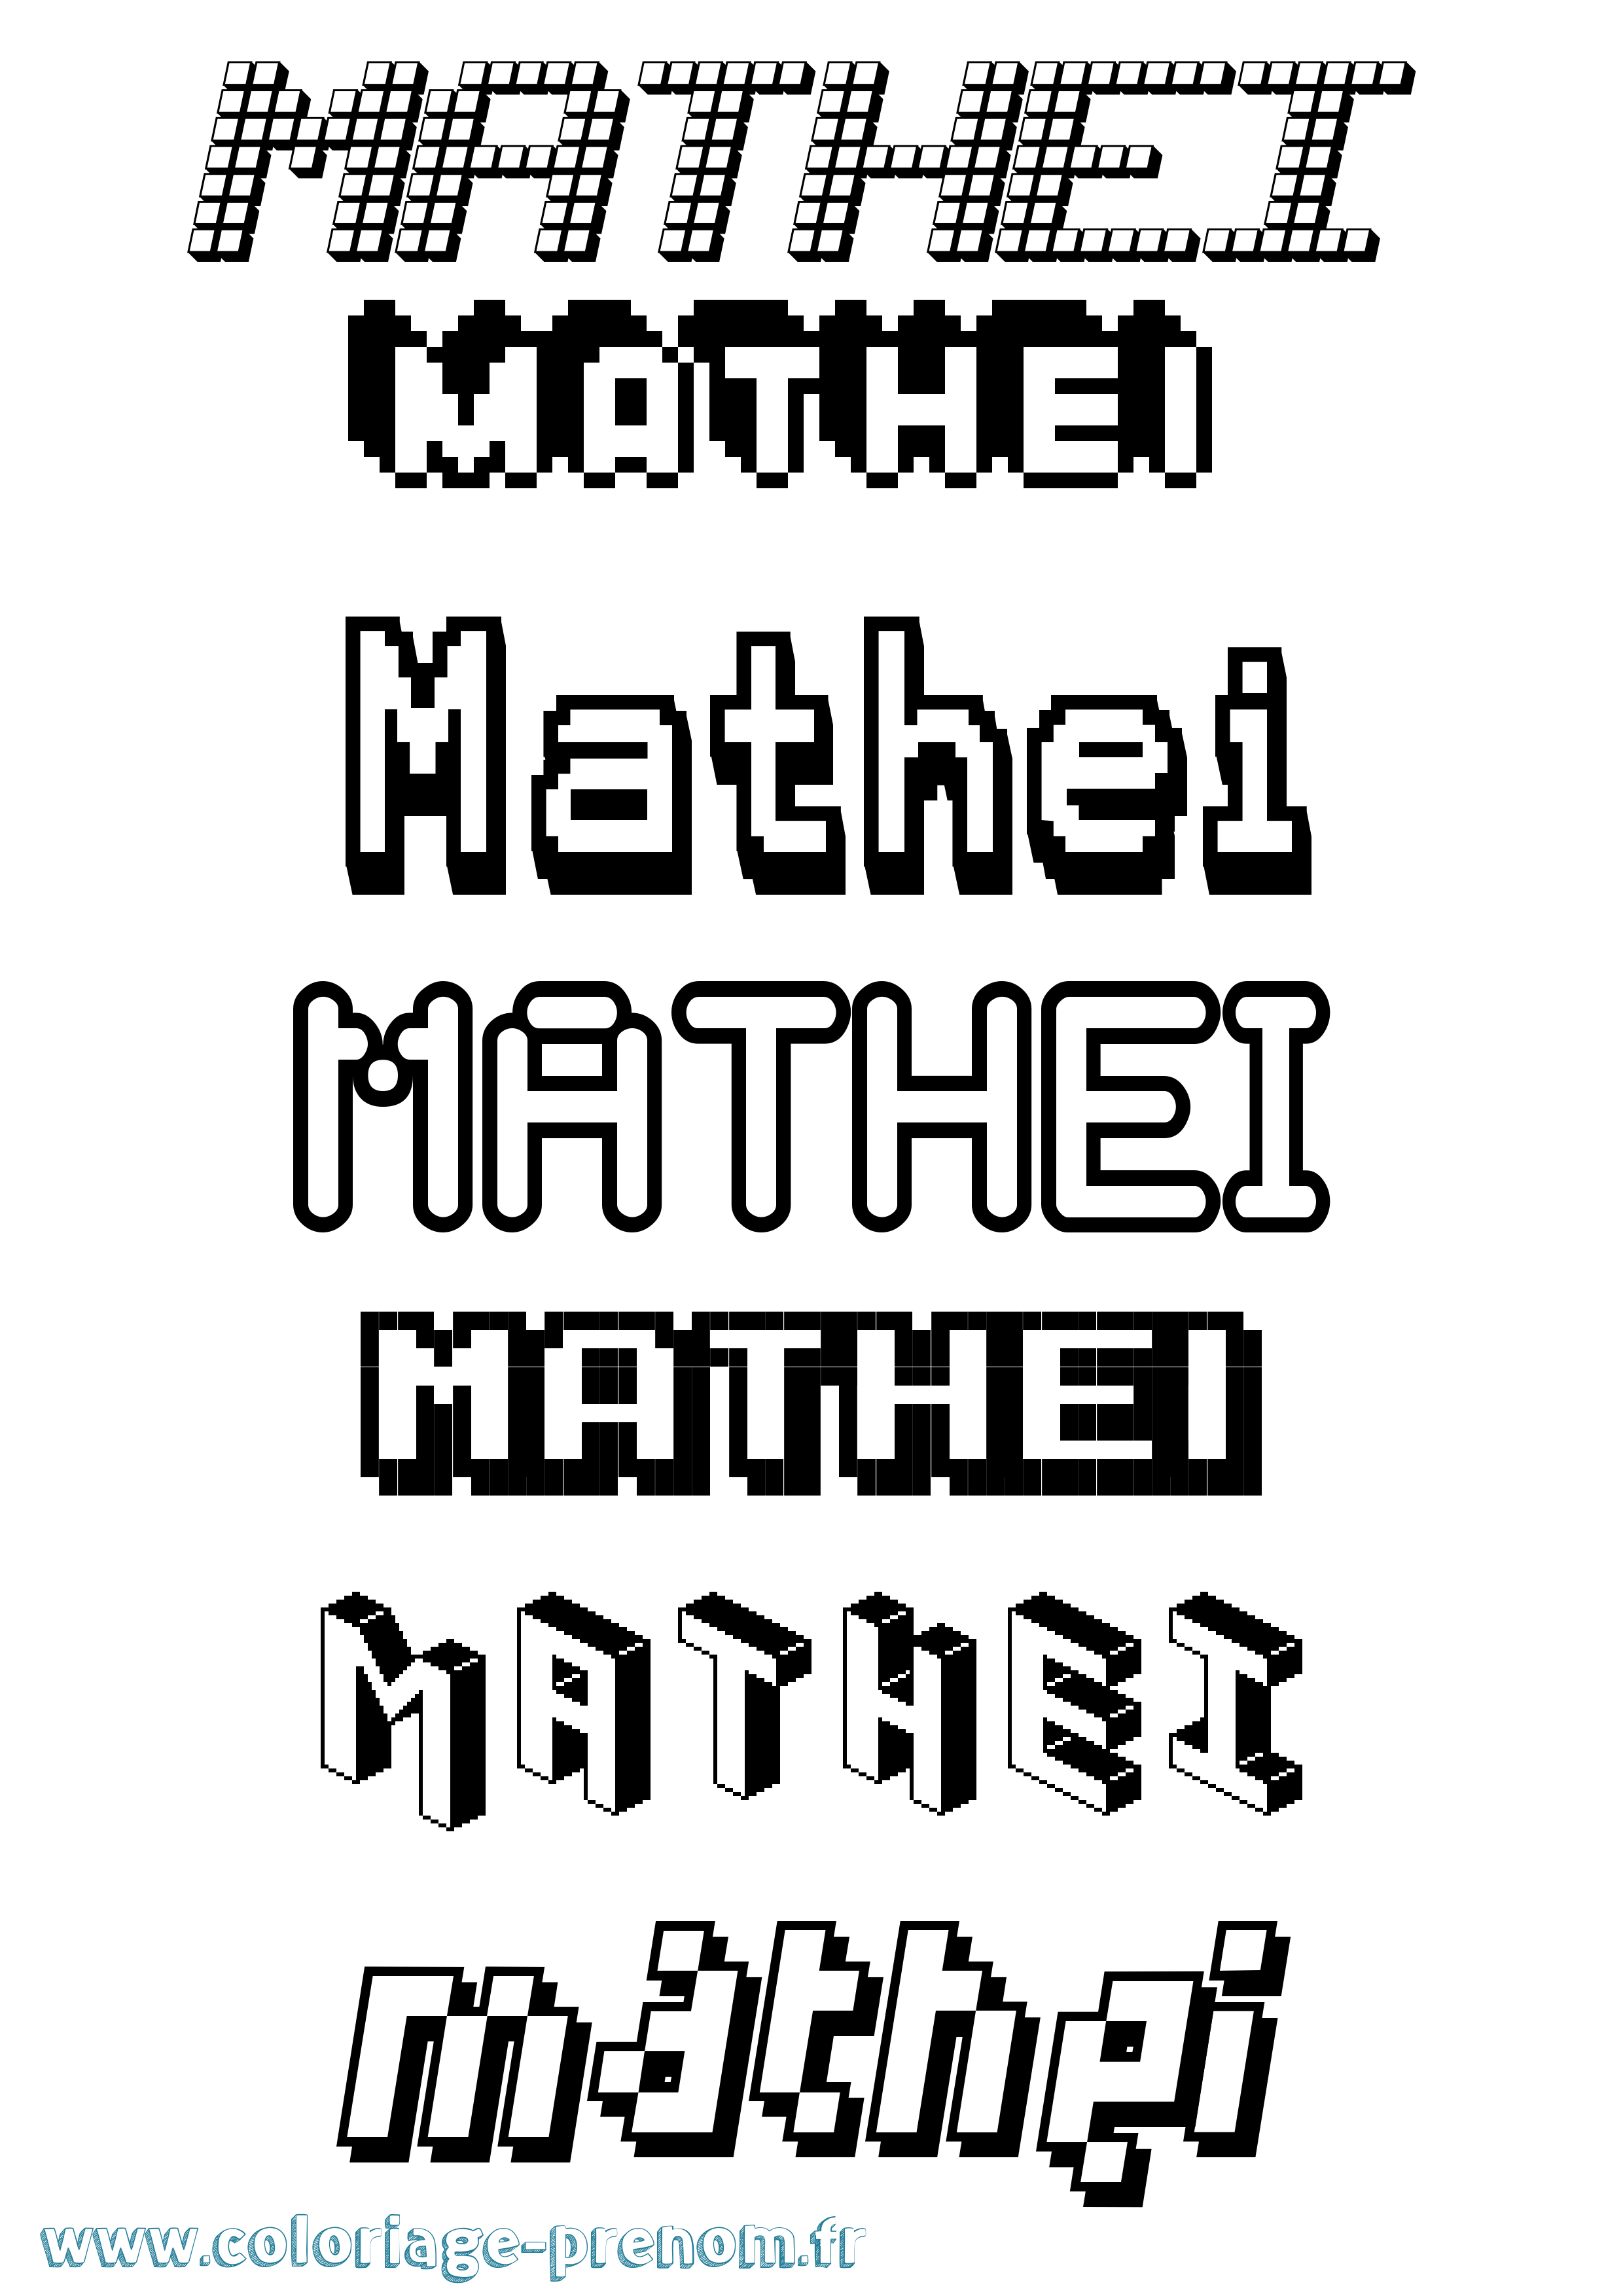 Coloriage prénom Mathei Pixel